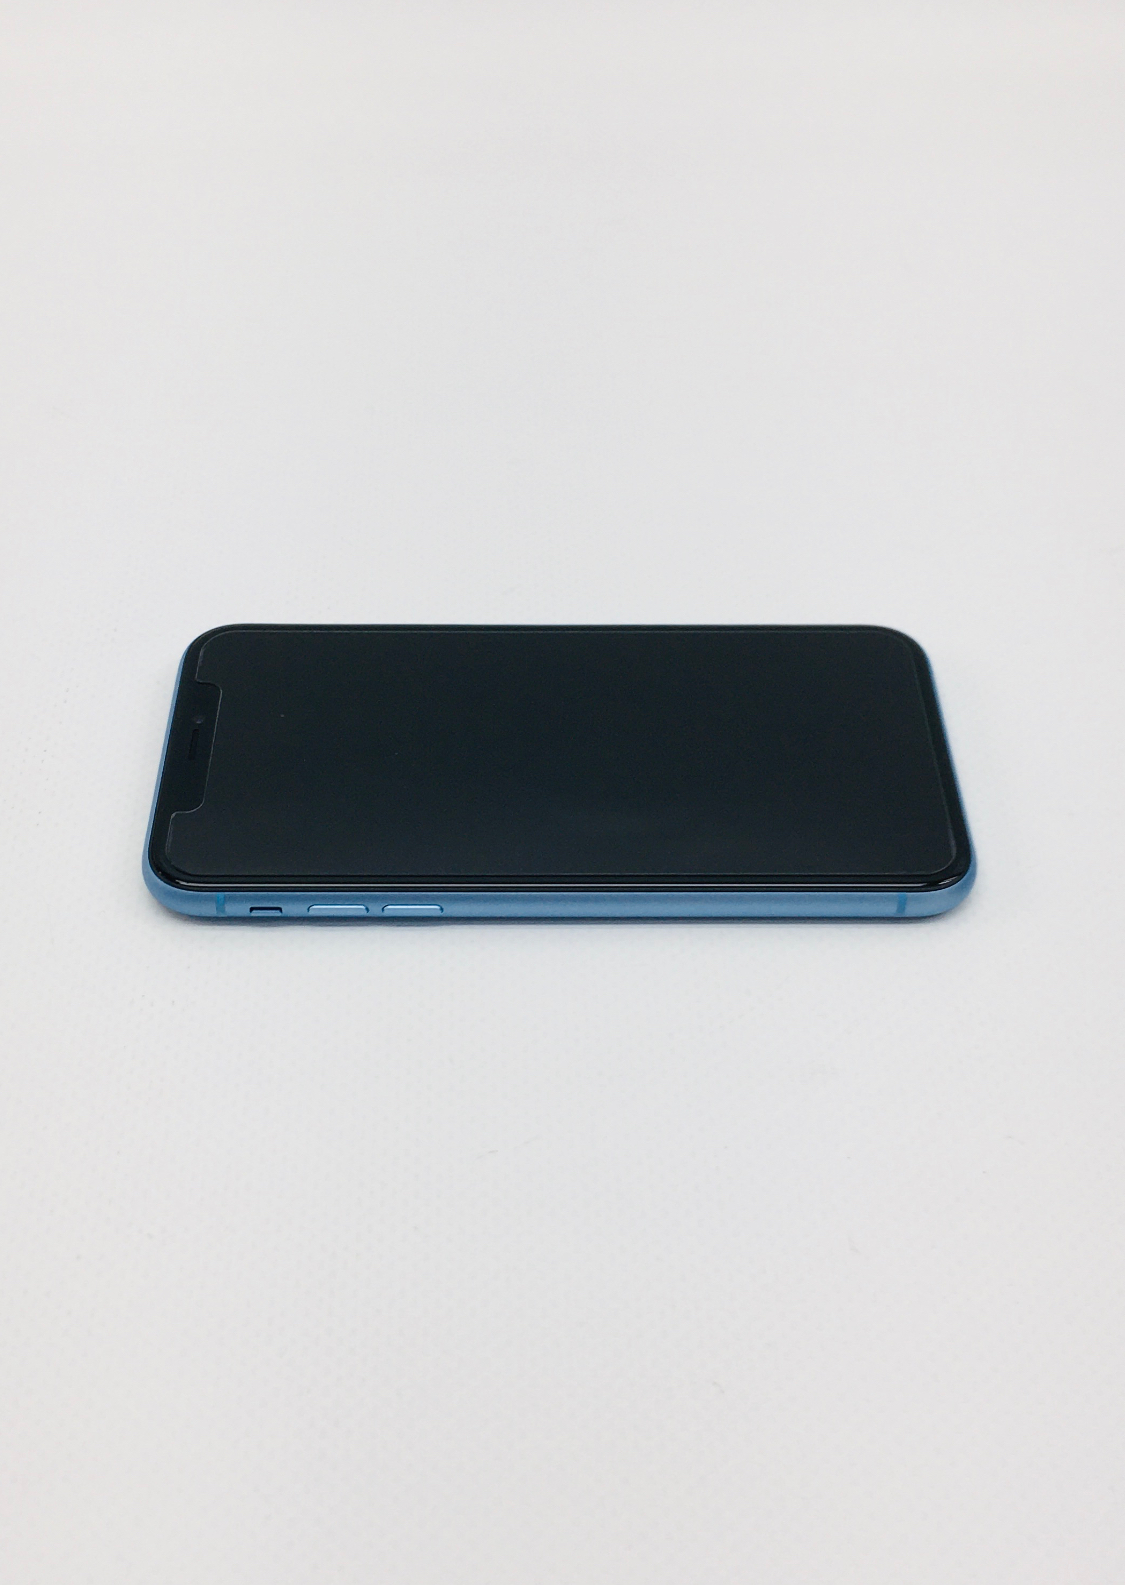 iPhone XR 128GB / Blue - mResell.com.au